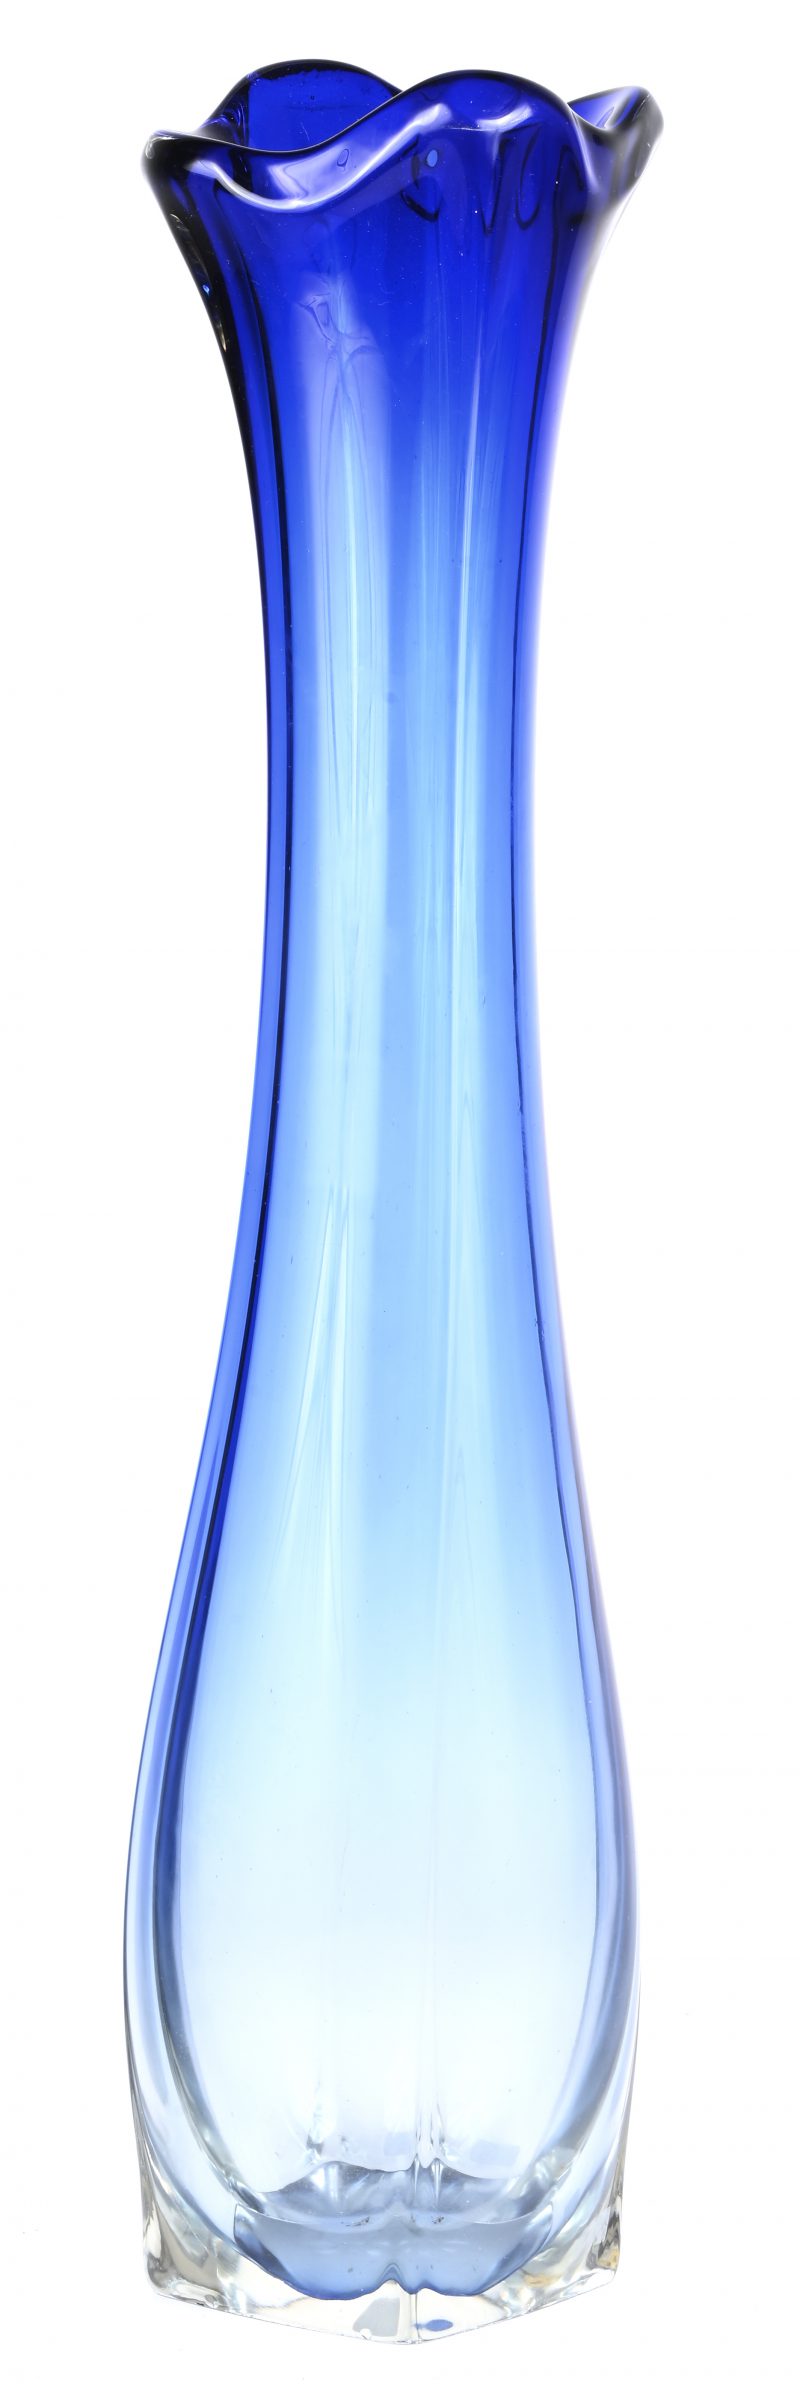 Een langgerekte blauwe glaspasta vaas.